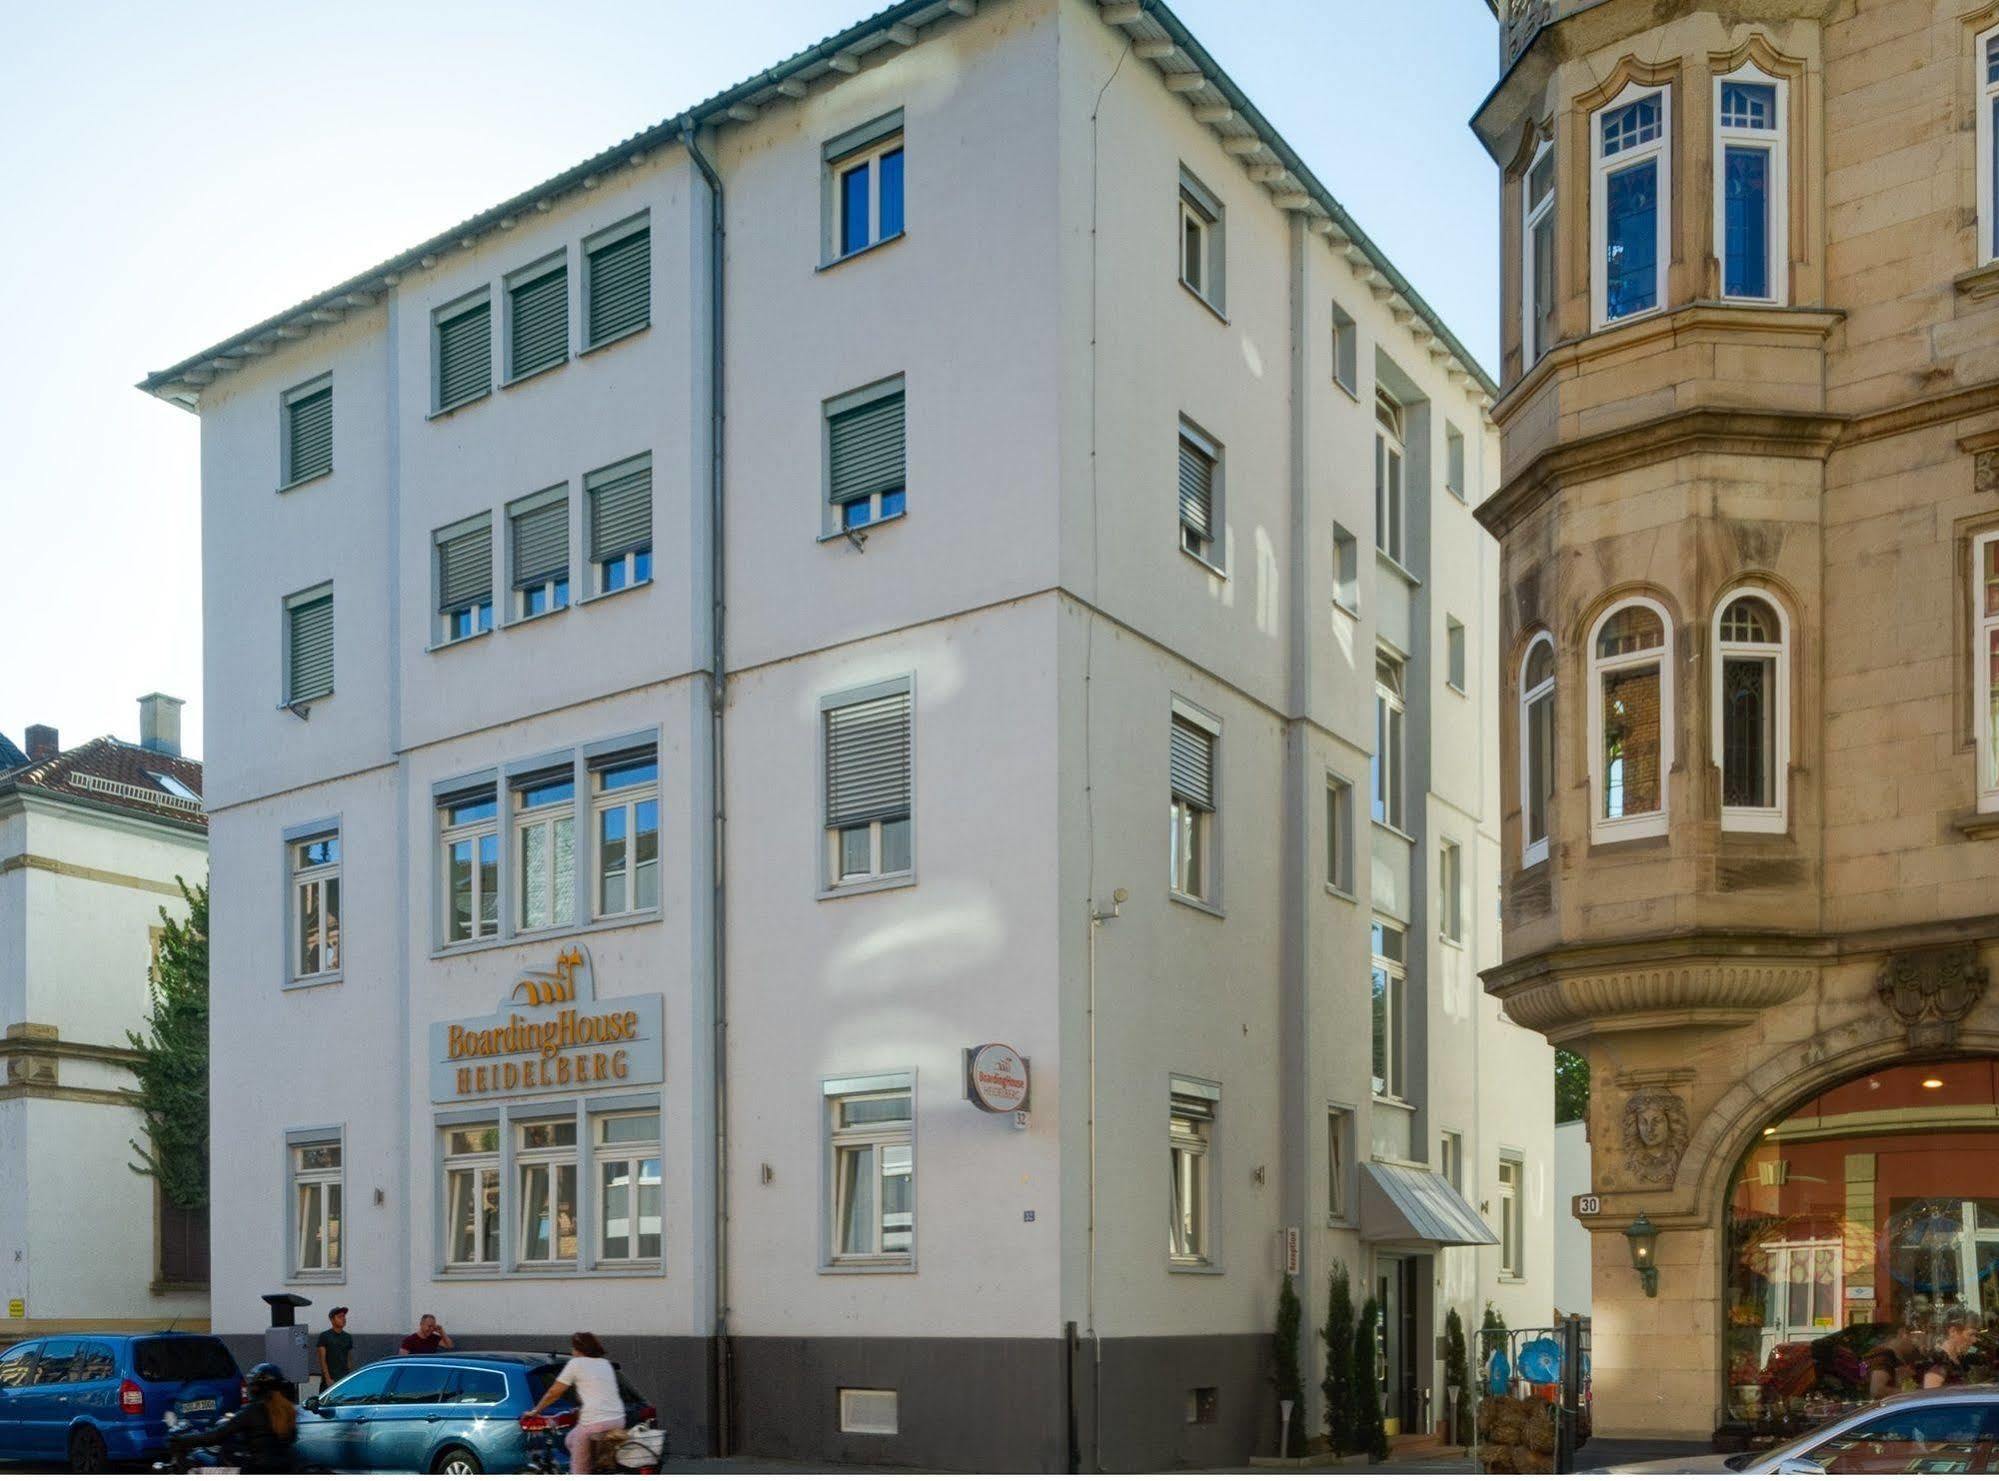 Boardinghouse Heidelberg Hotel Exterior photo